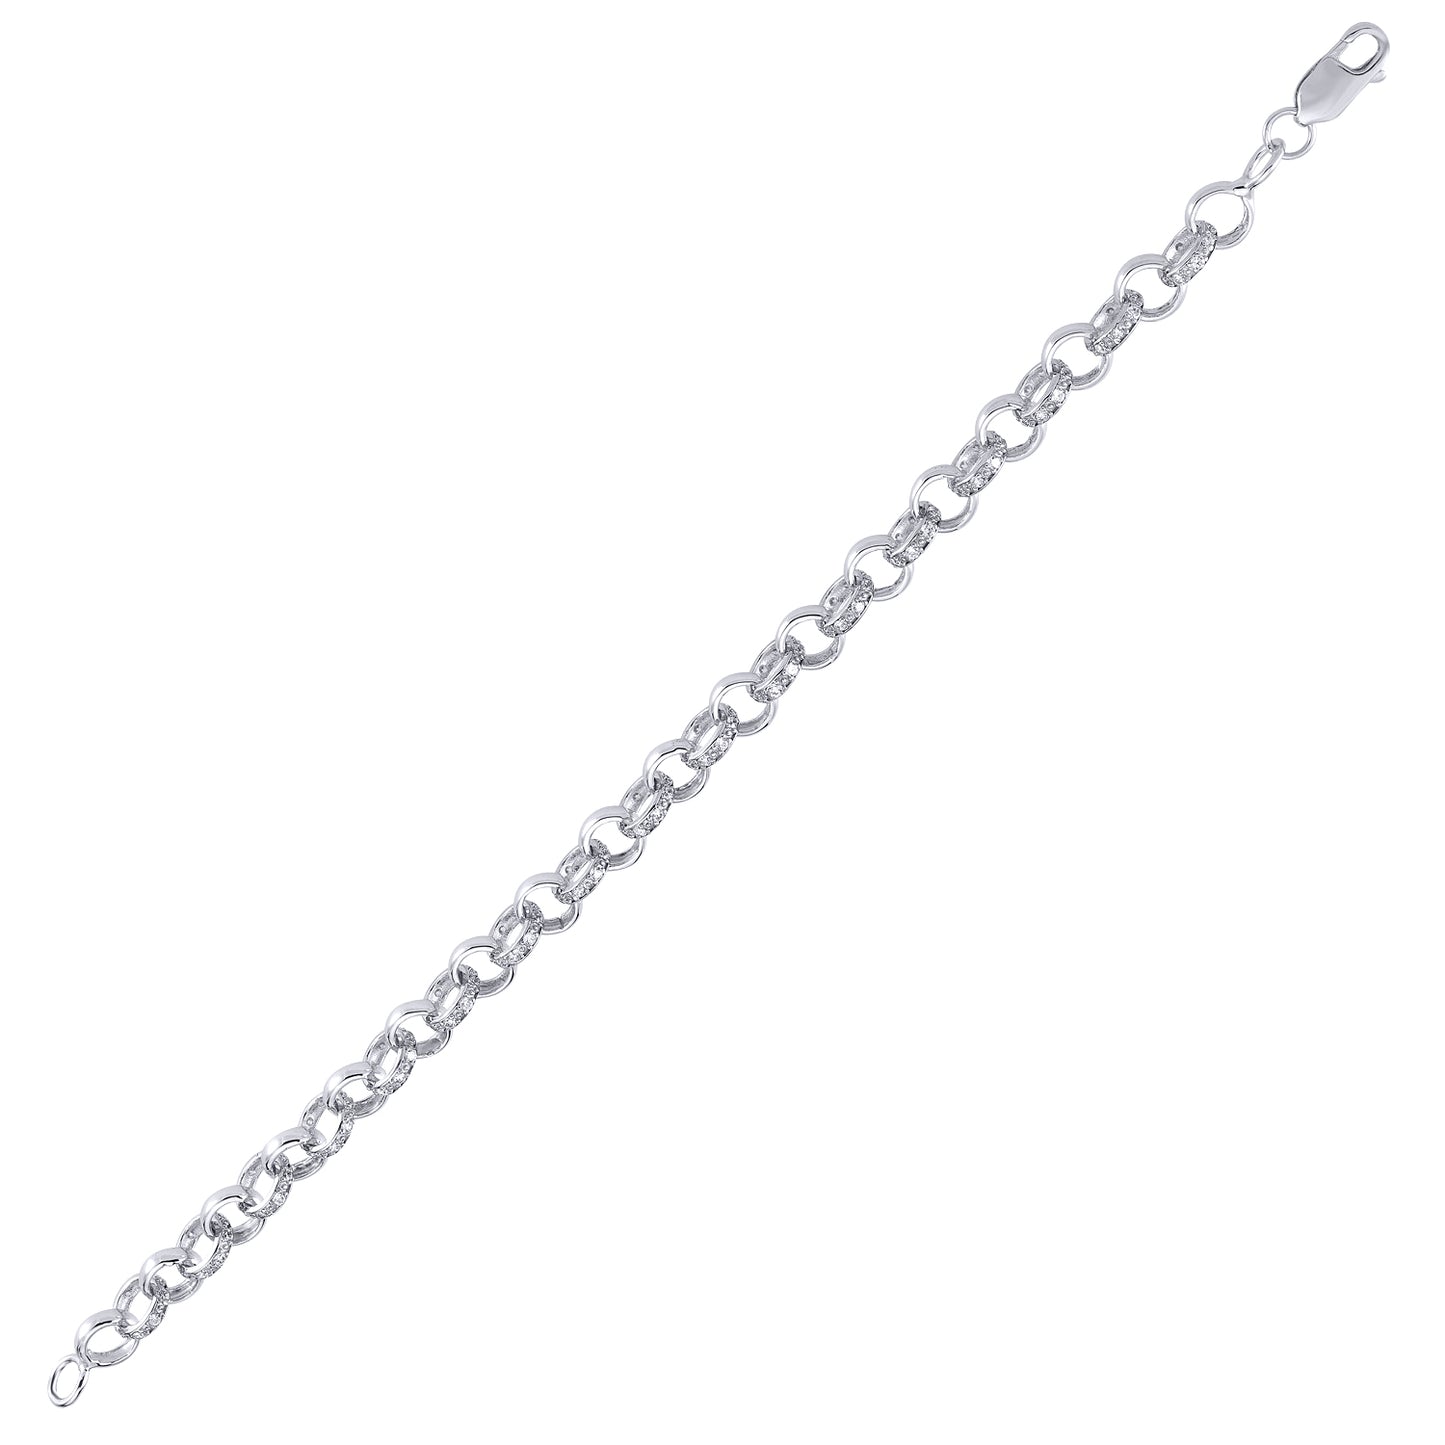 Sterling Silver  CZ Iced Belcher 8mm Chain Link Bracelet 8 inch - ACN024A